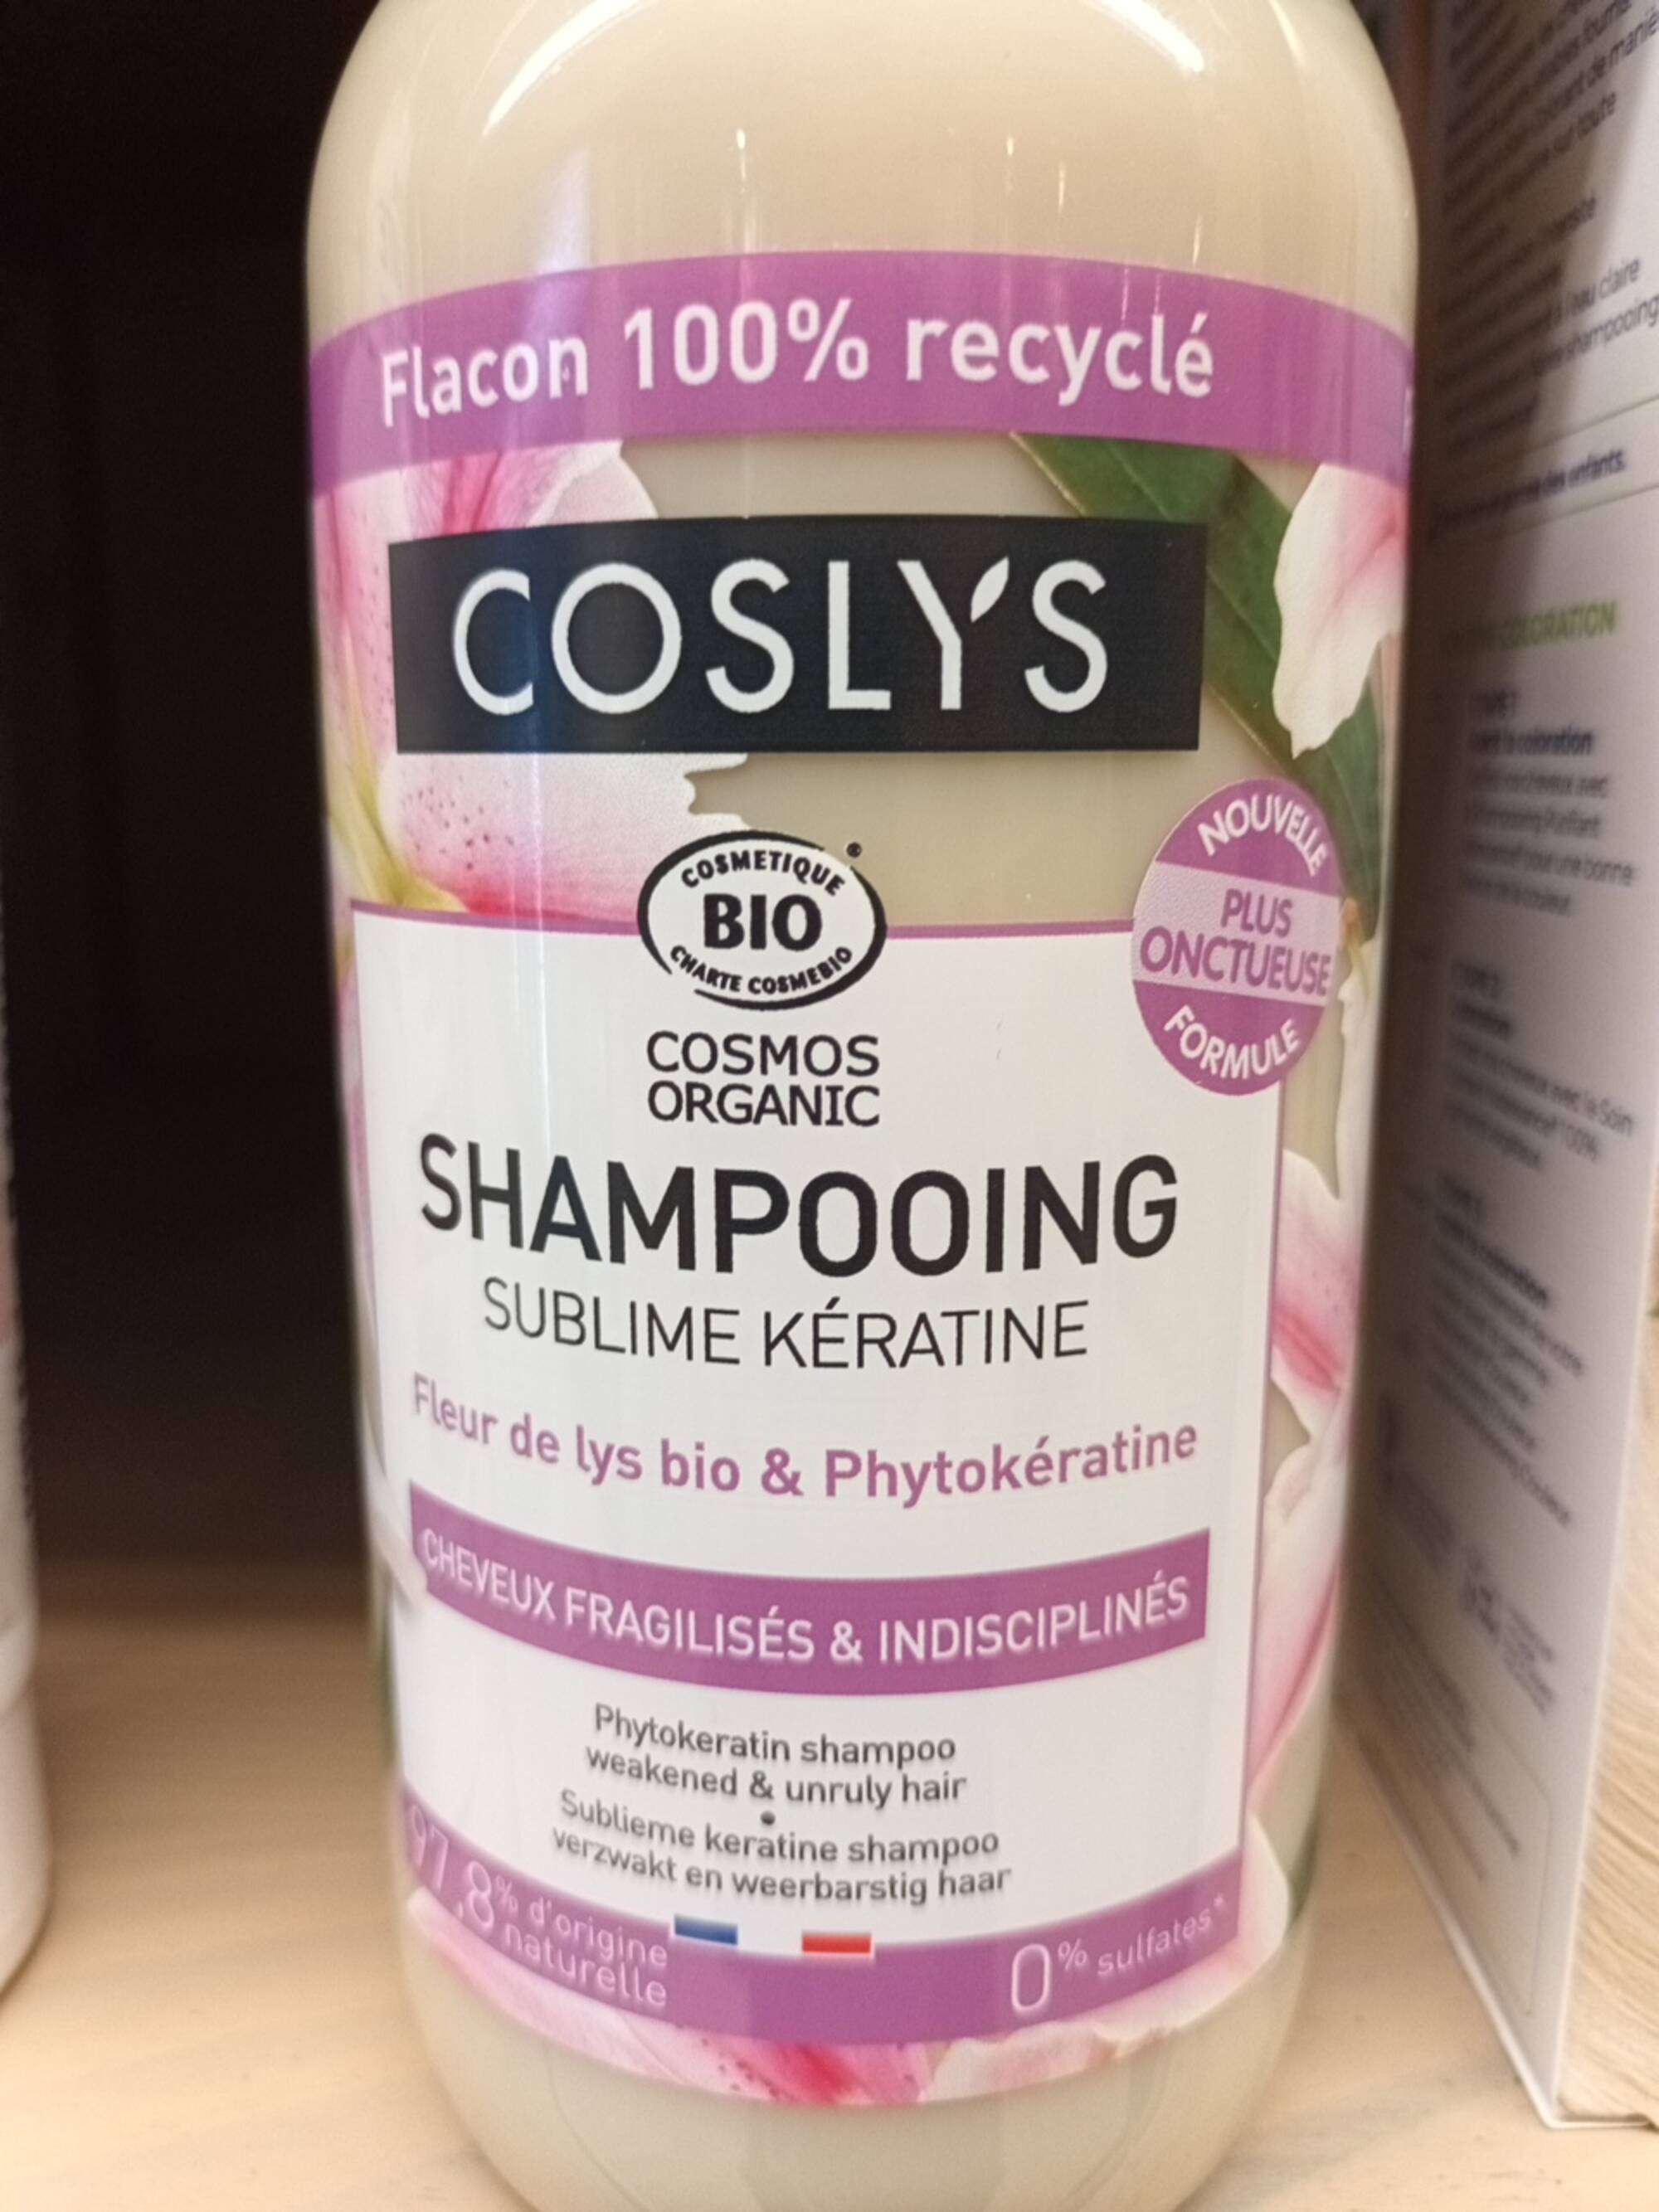 COSLYS - Shampooing sublime kératine bio